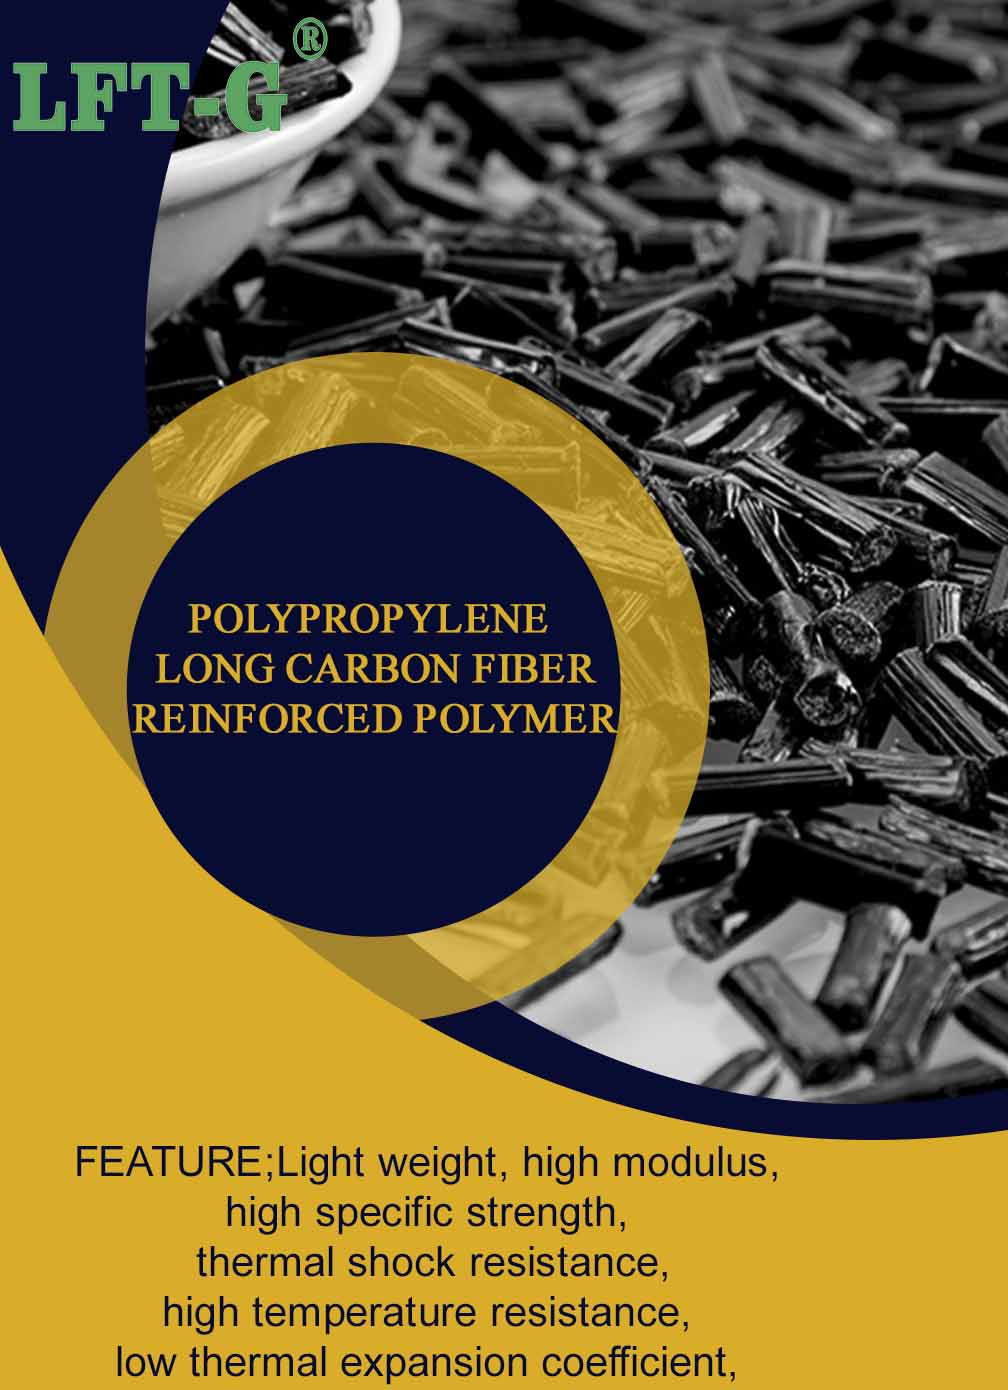 Long carbon fiber polymer